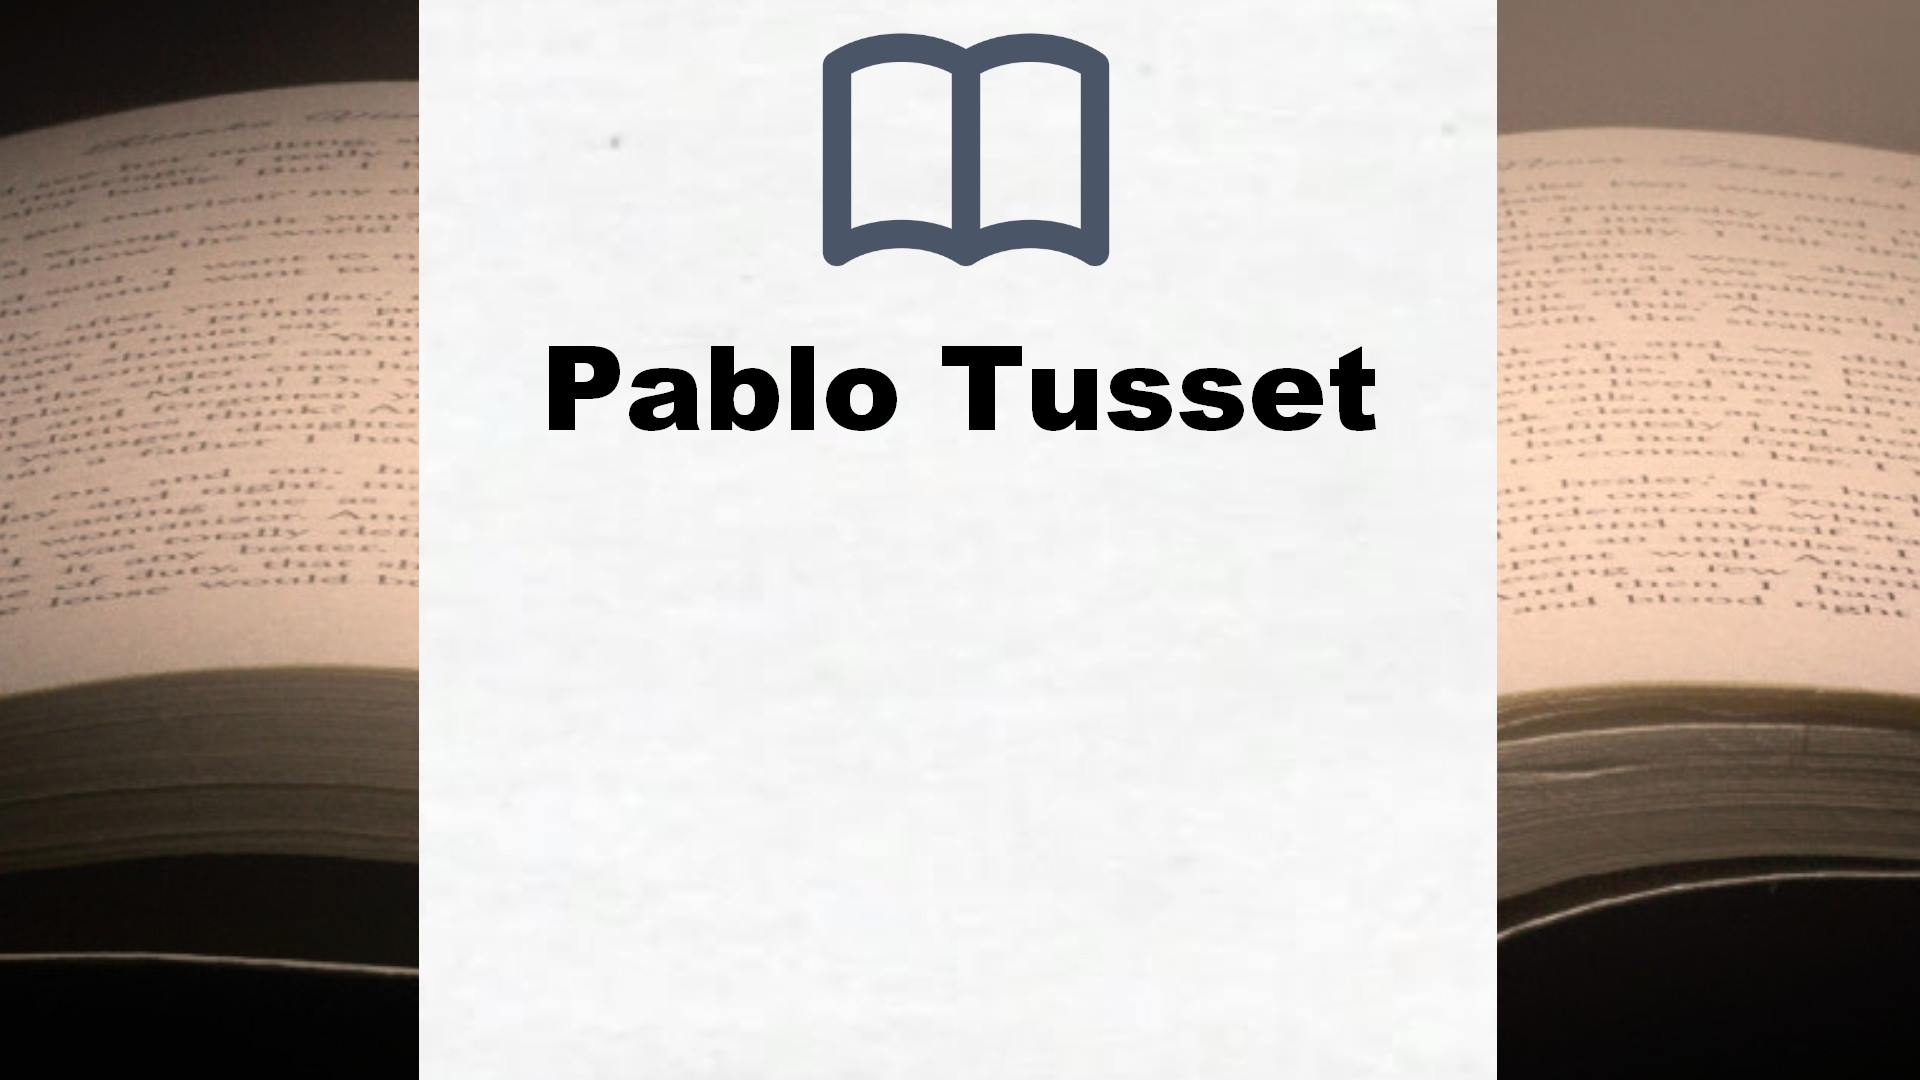 Libros Pablo Tusset